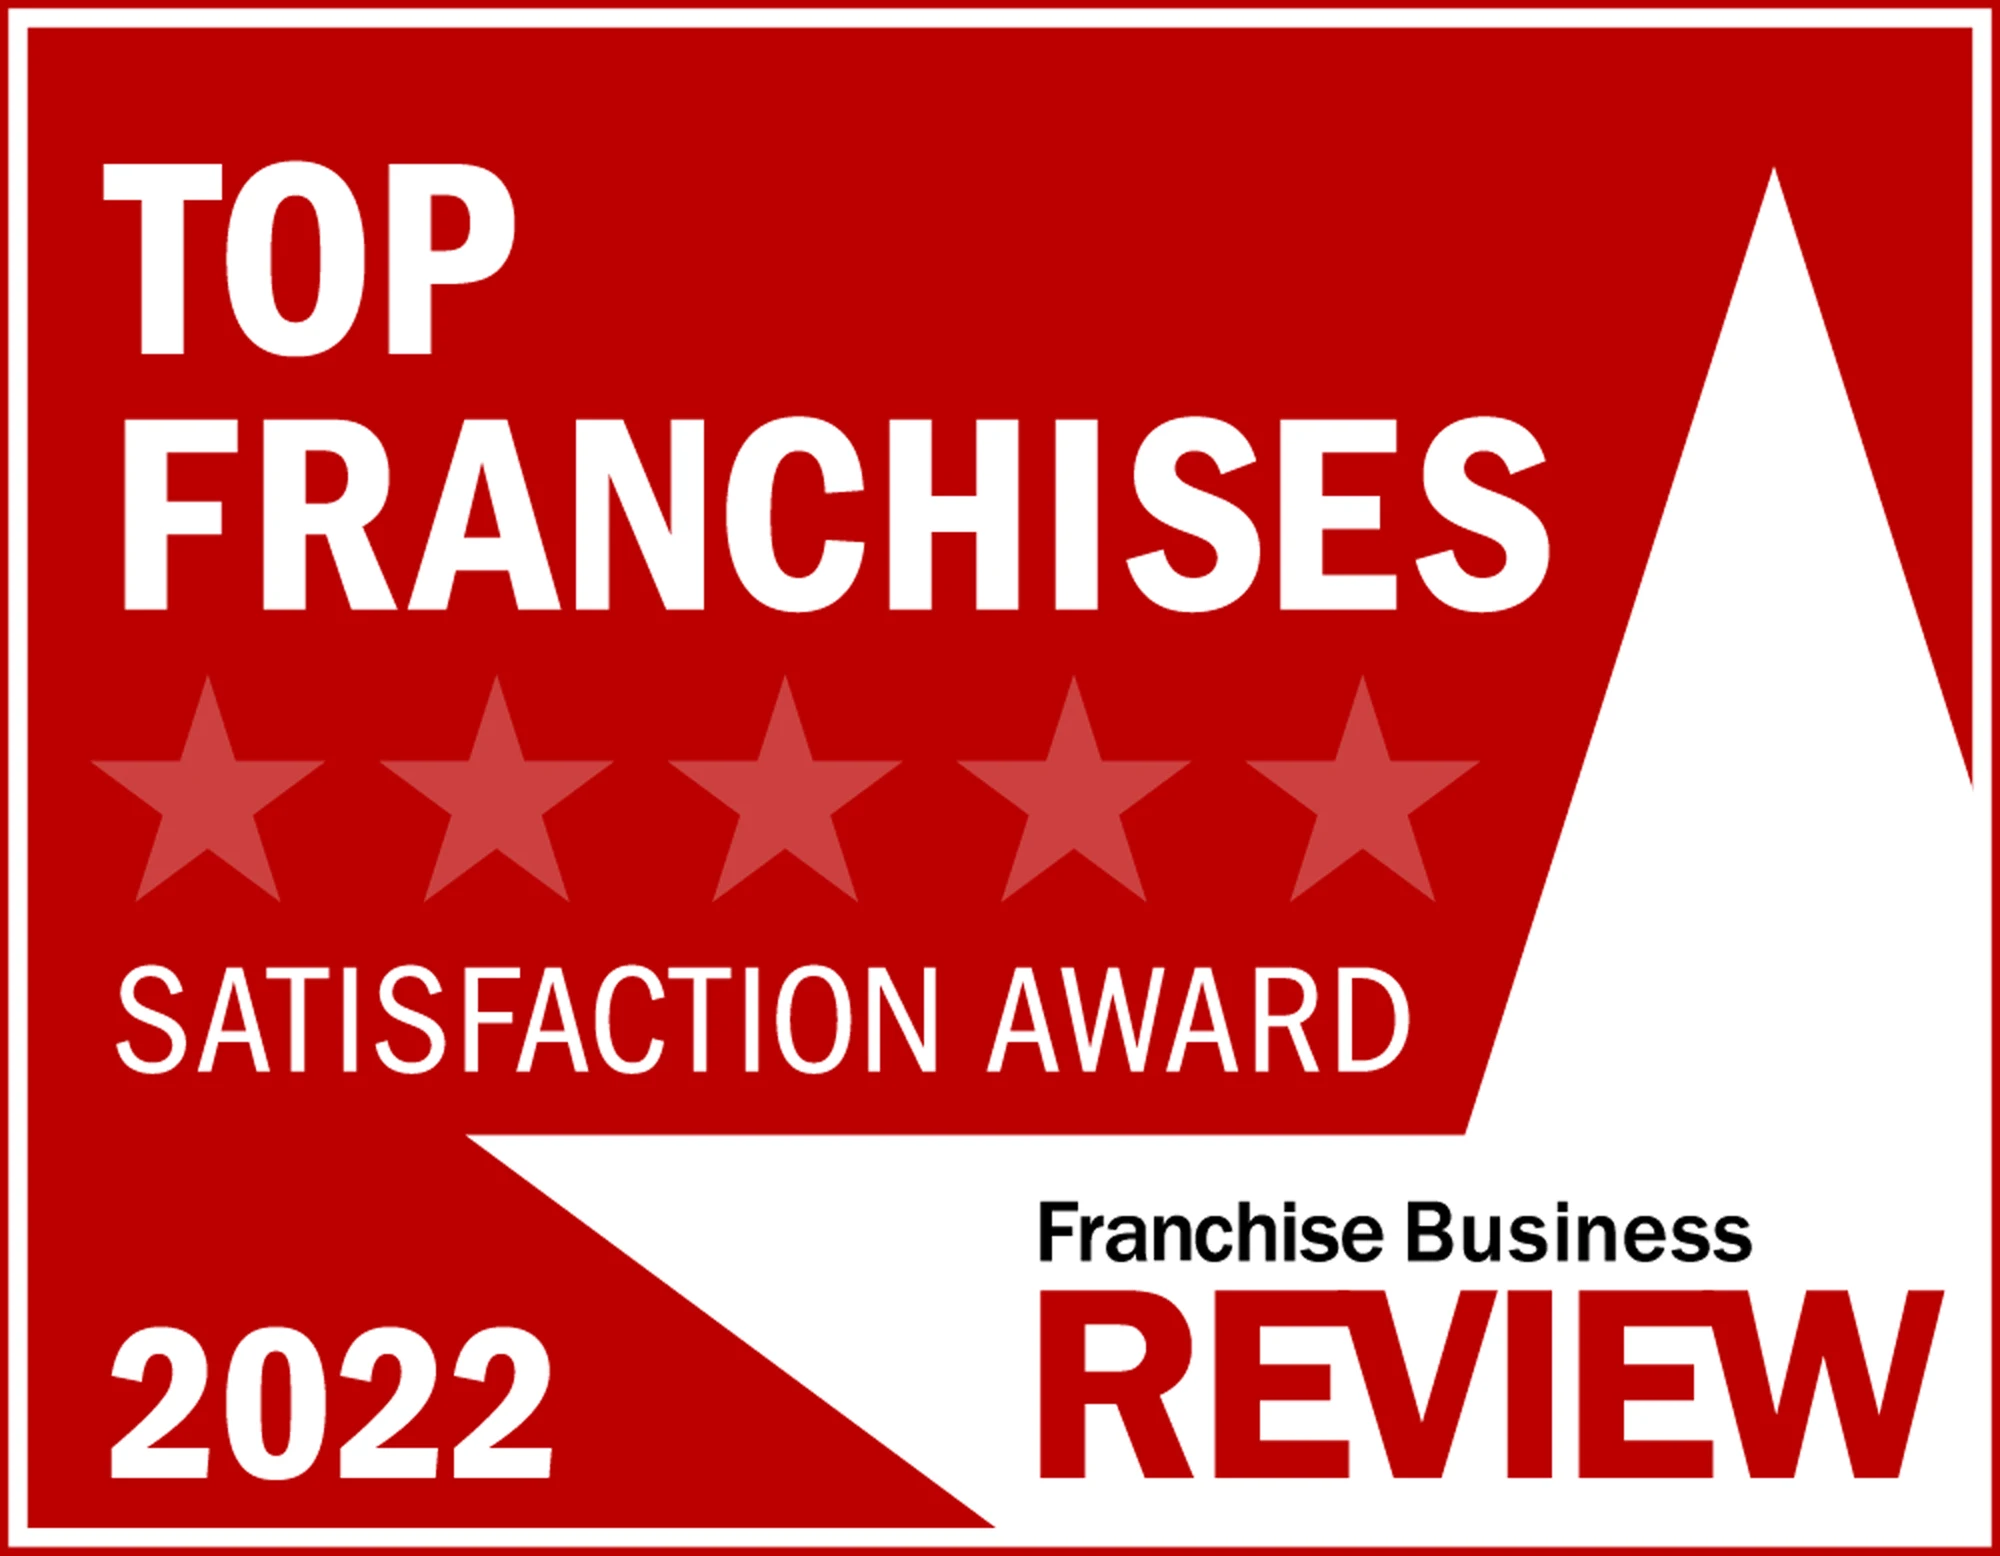 2022 Franchise Business Review Top Franchises